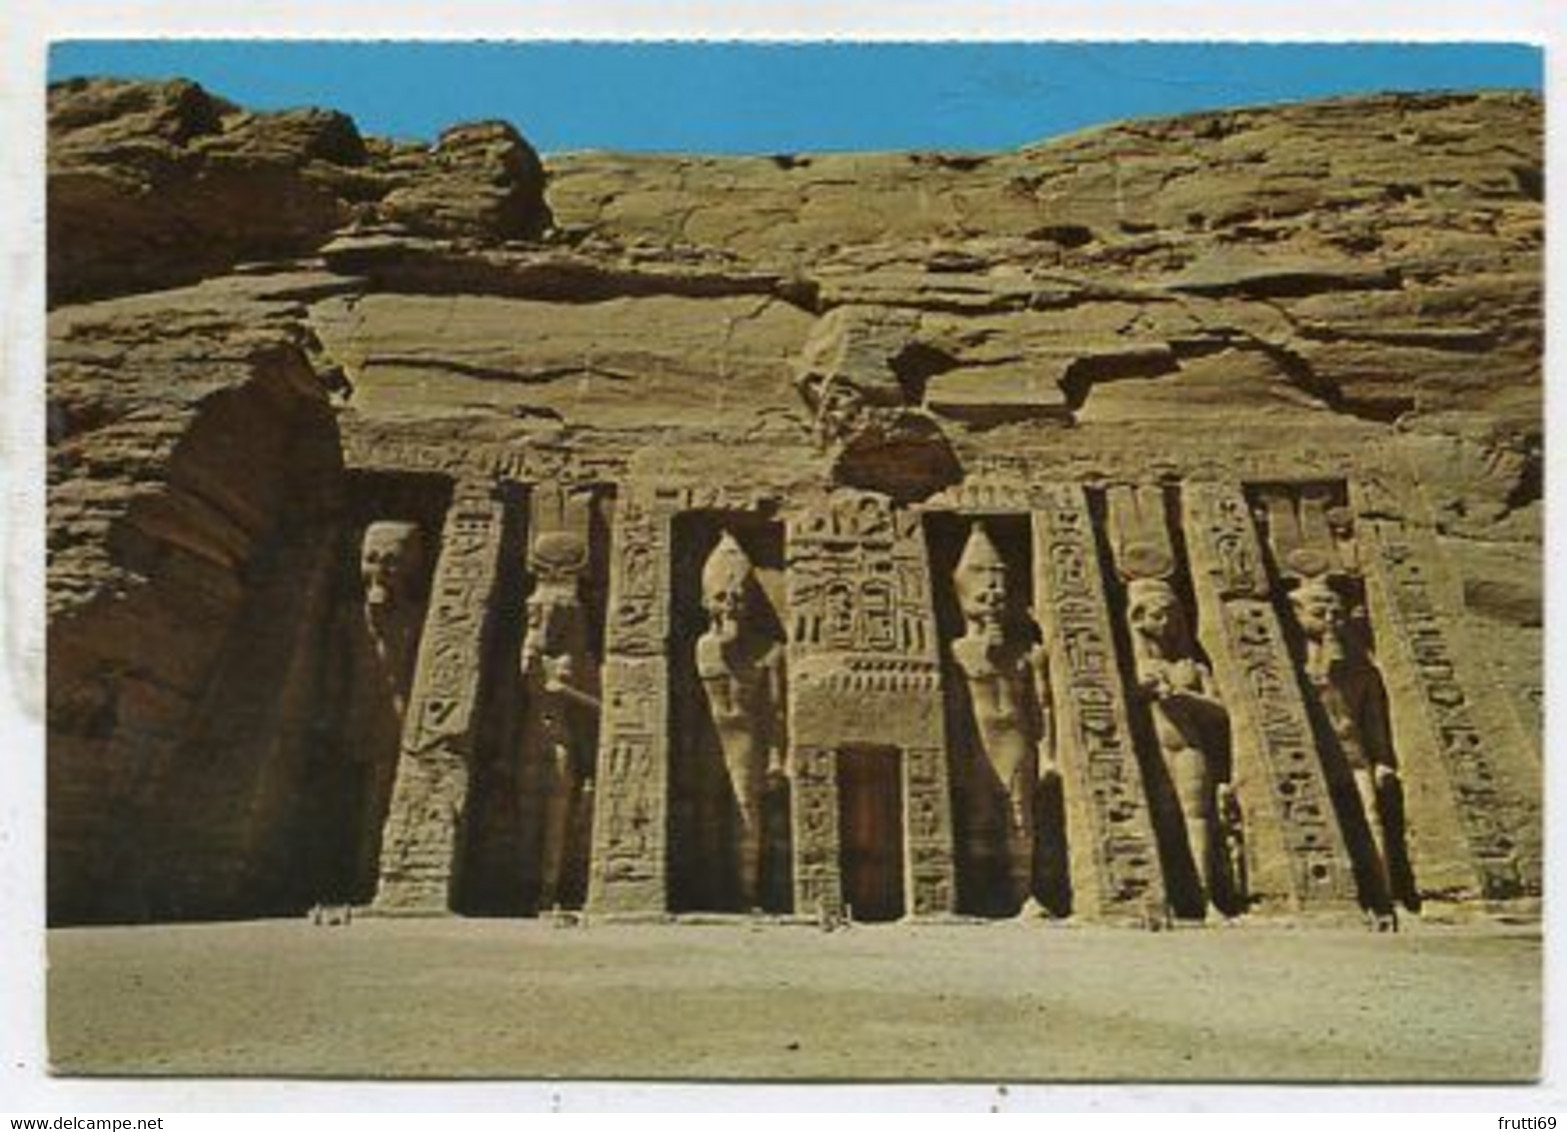 AK 102230 EGYPT - Abu Simbel - Small Rock Temple - Abu Simbel Temples